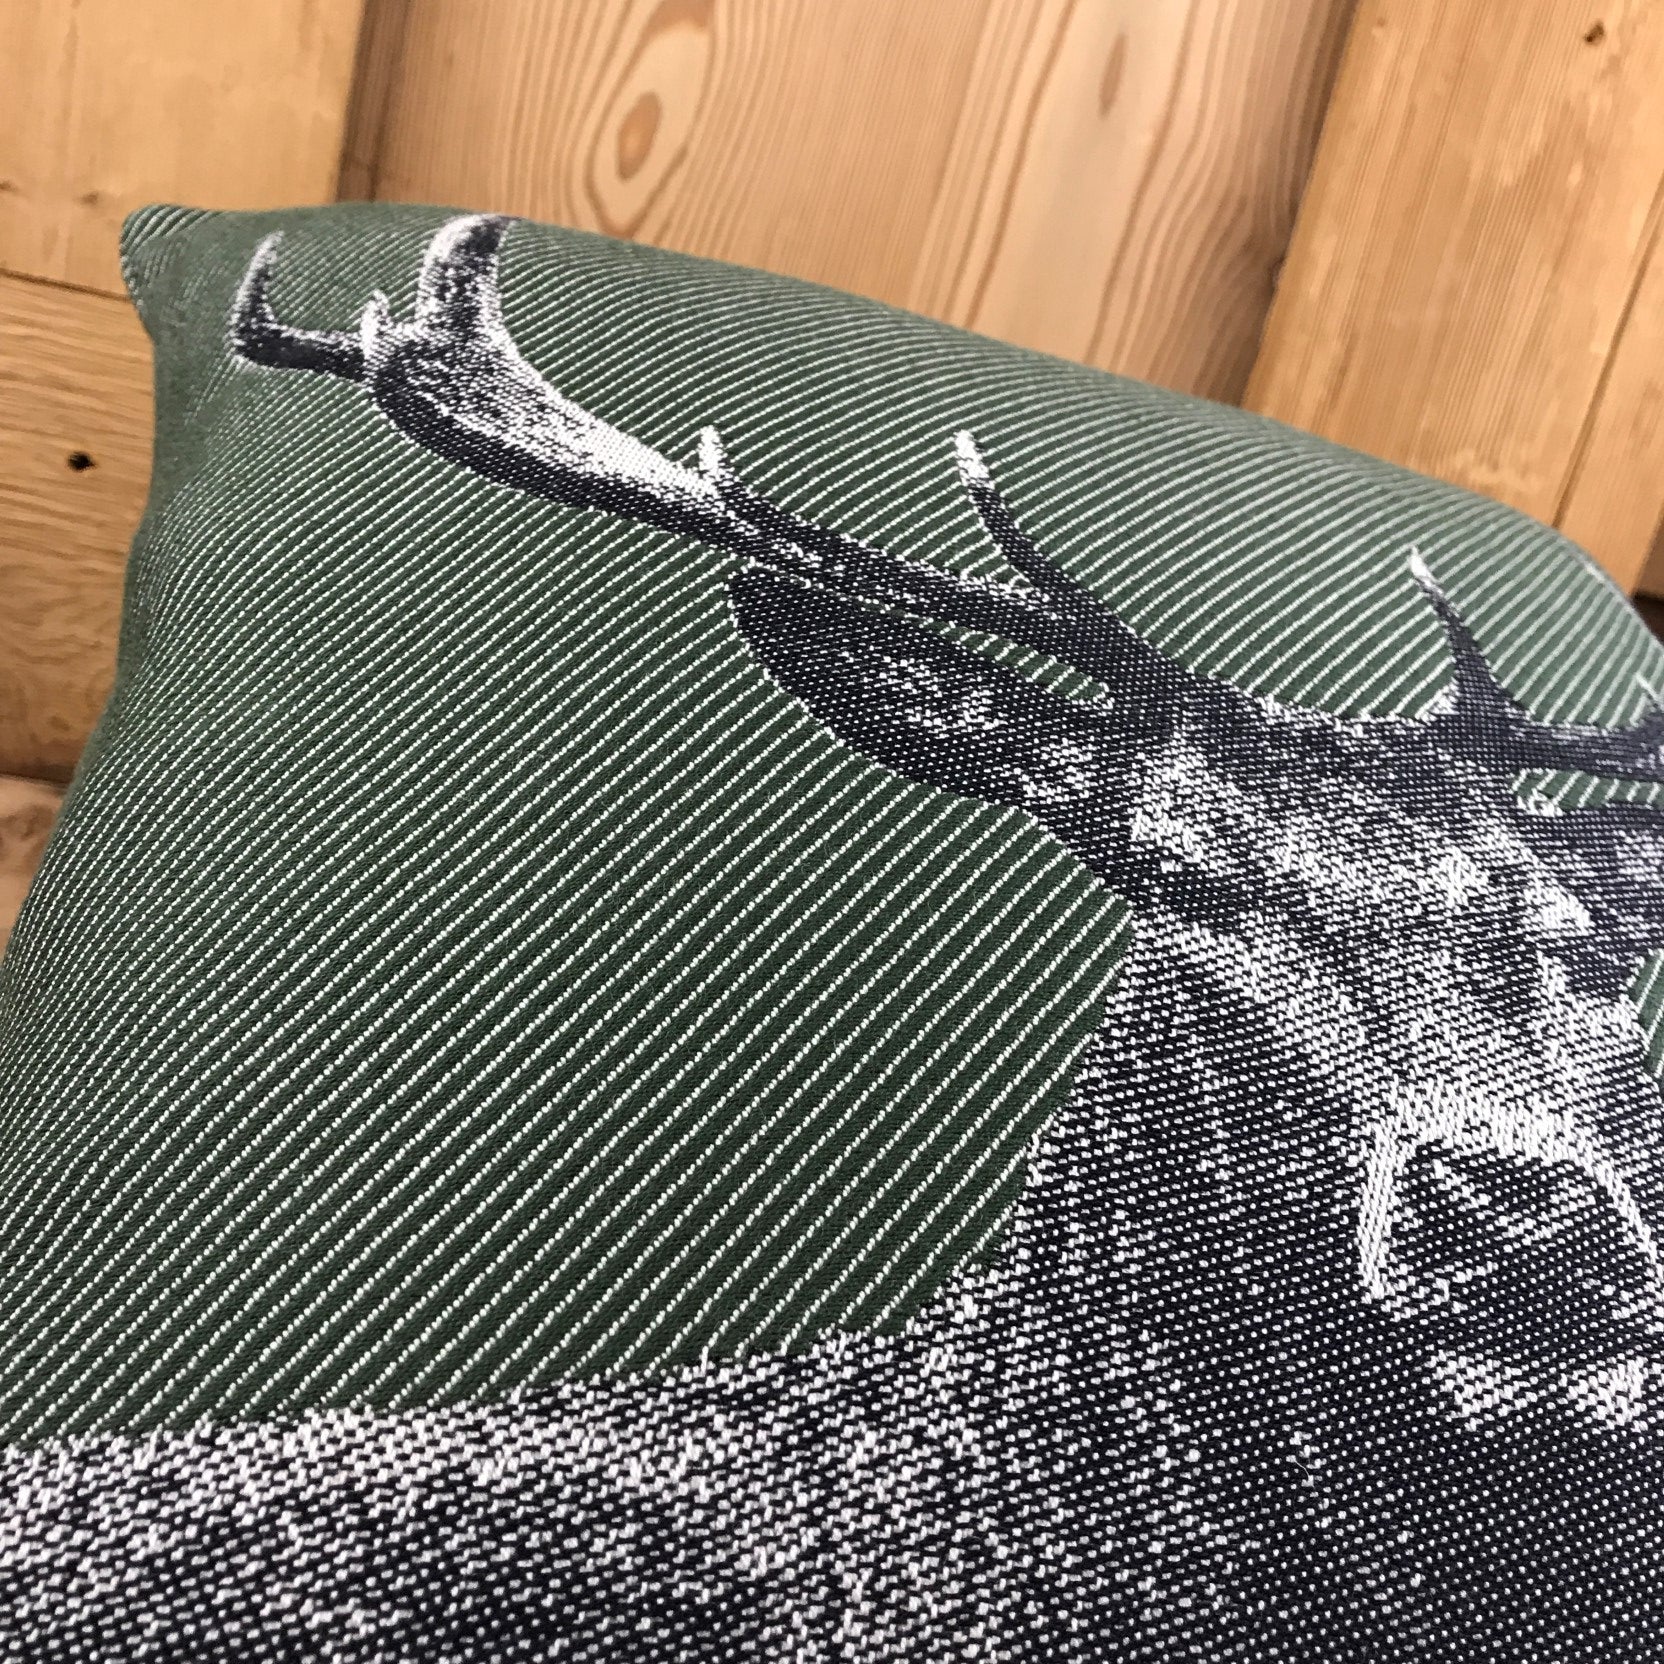 "Testa cervo" federa cuscino in 100% cotone, 40 x 40 cm, colore verde / nero - Gaidra HOME